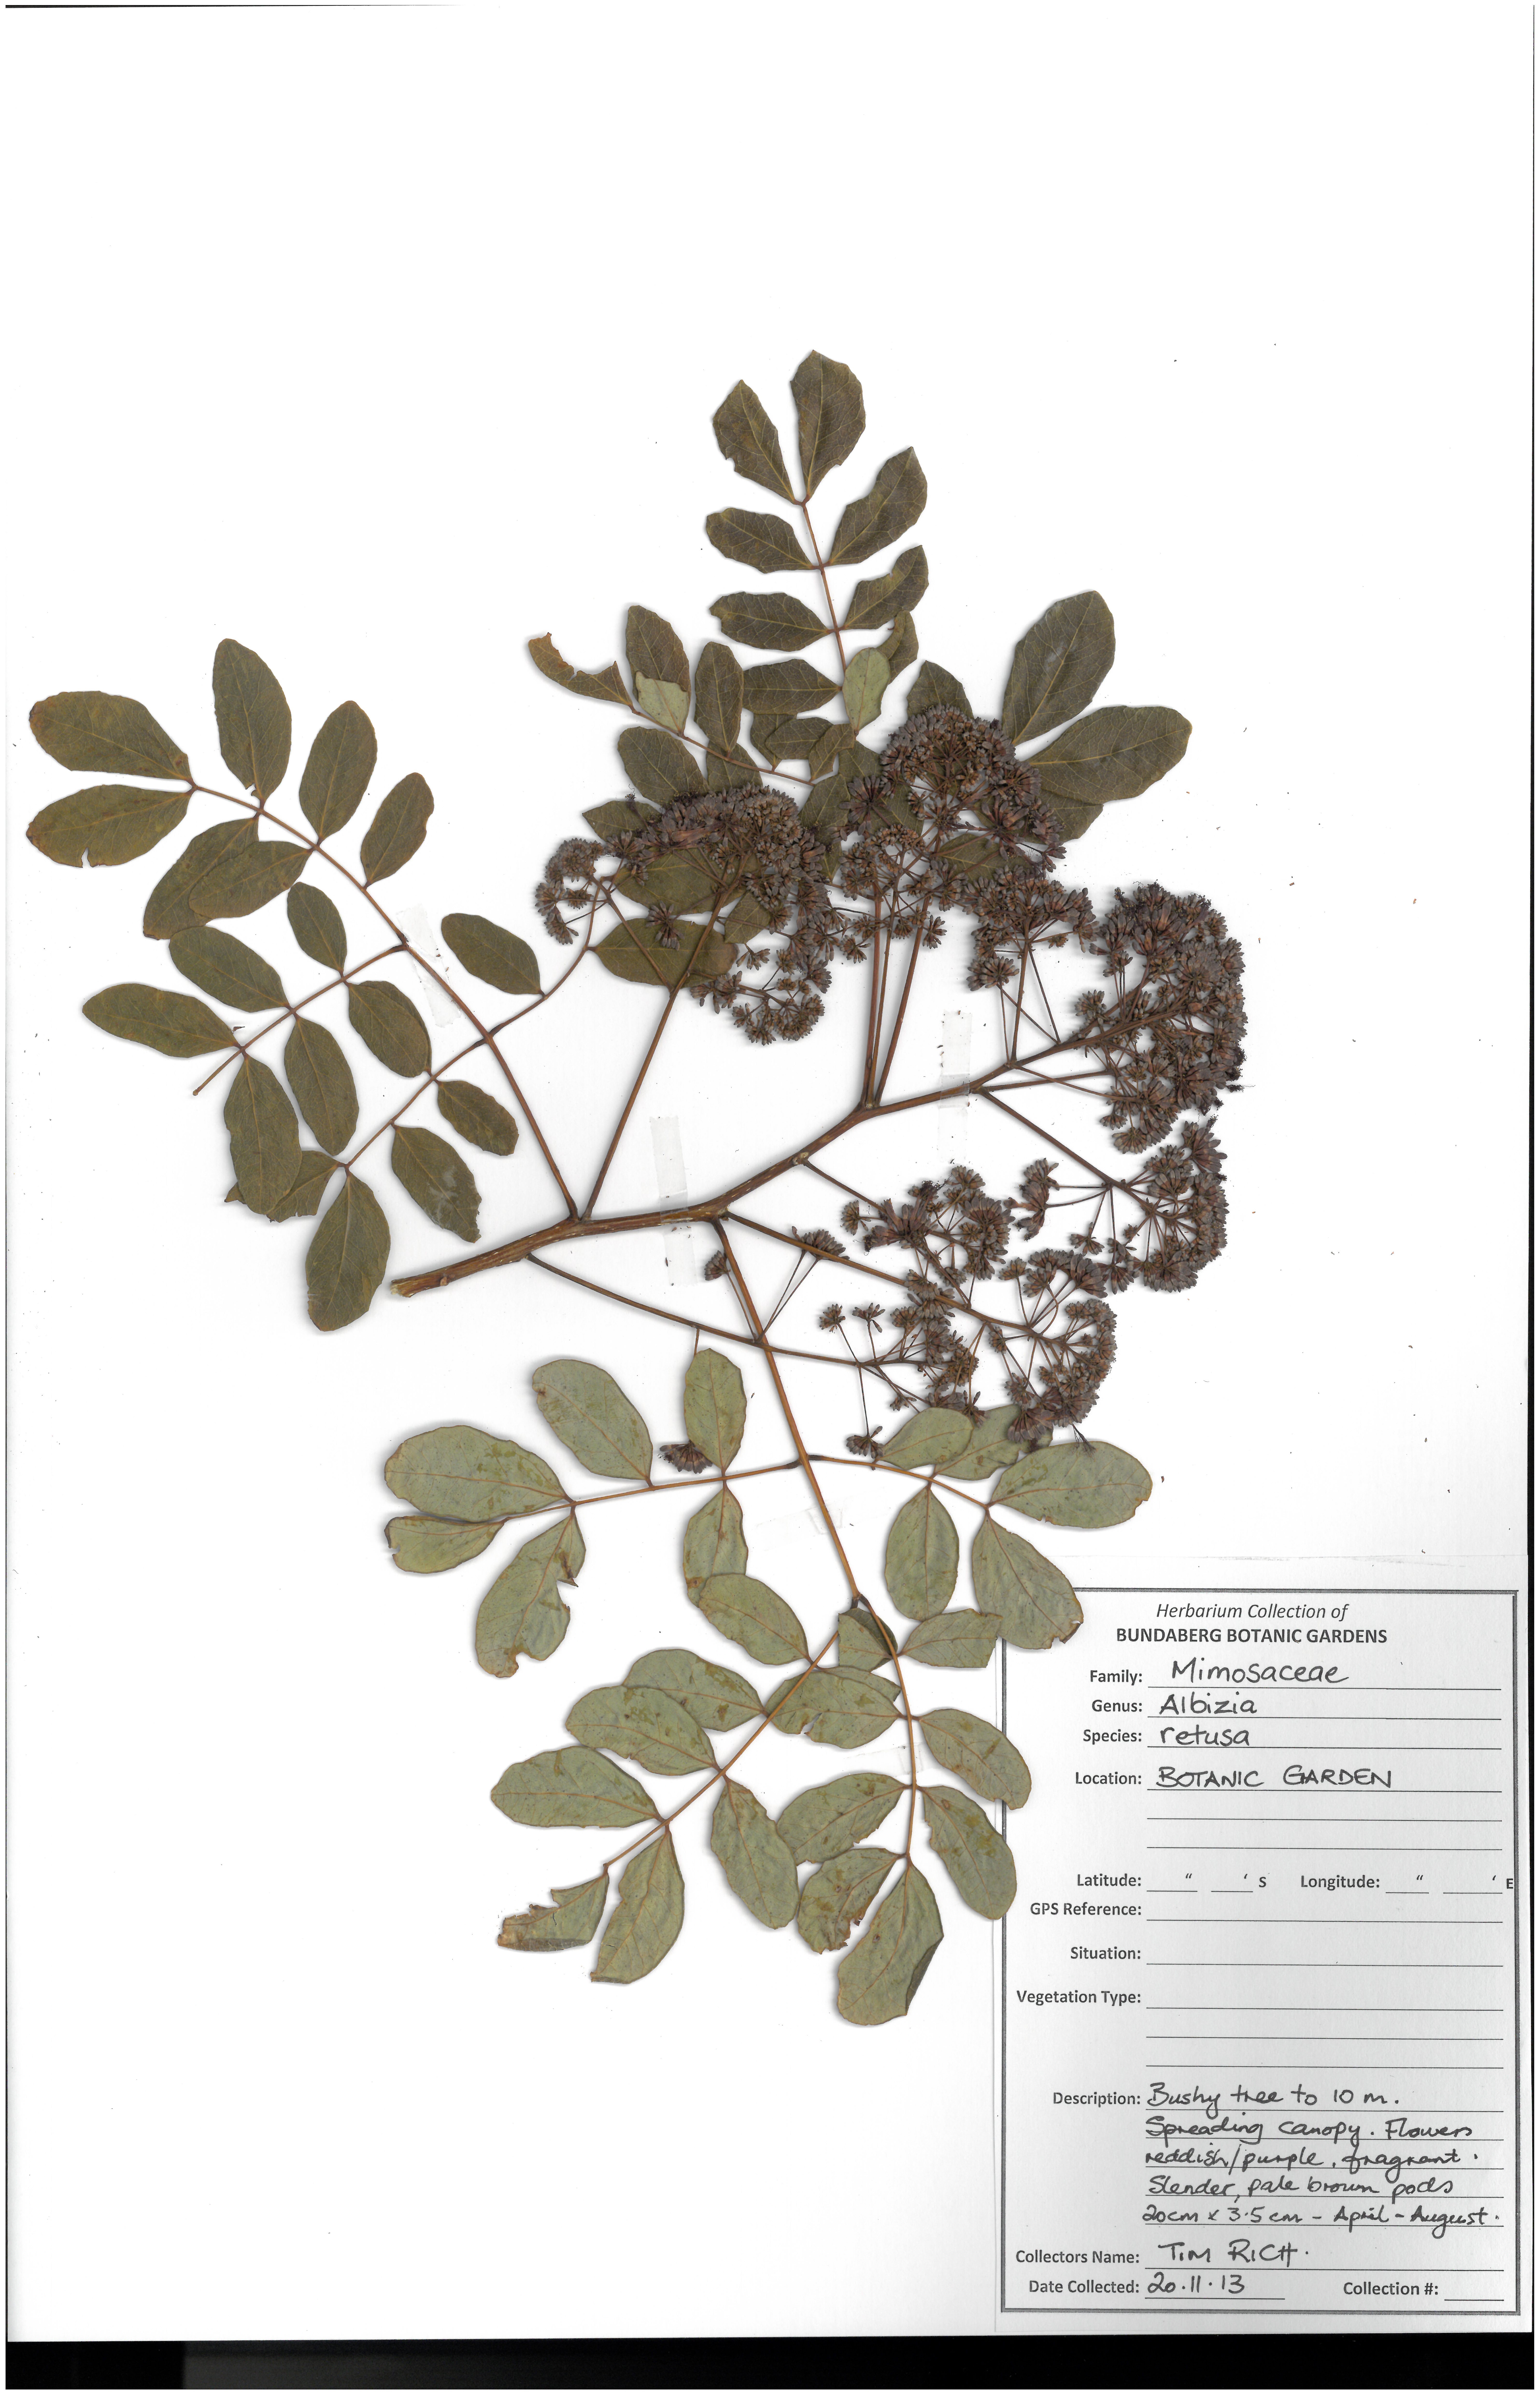 Mimosaceae albizia retusa